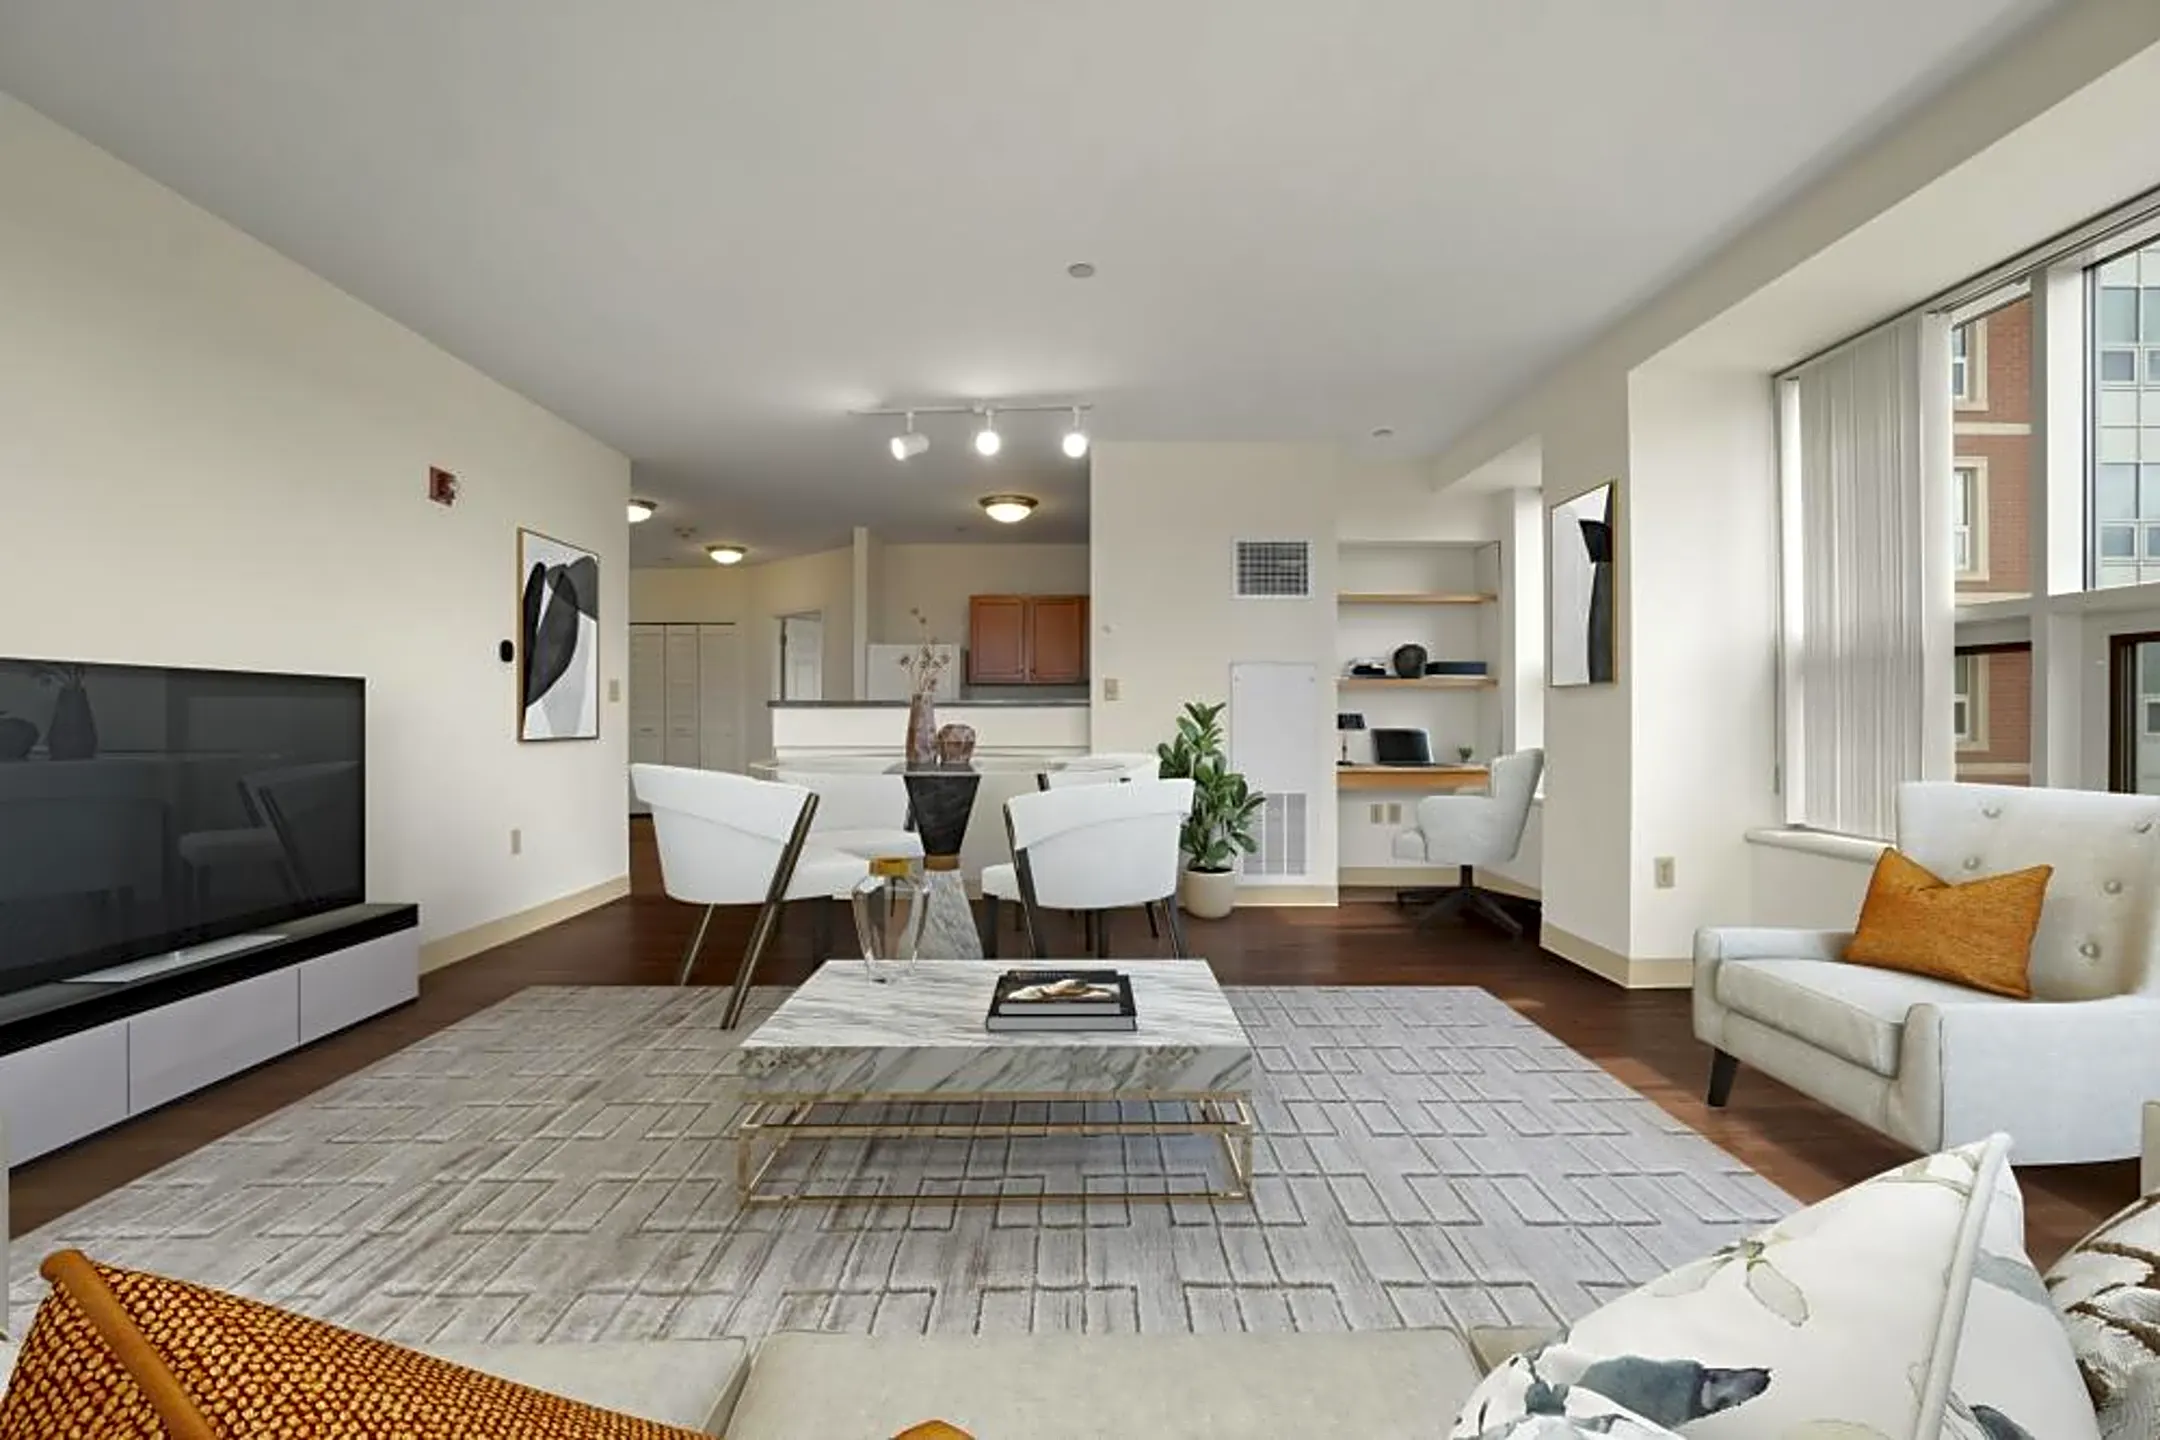 8 Kimball Ct Burlington MA Apartments for Rent Rent